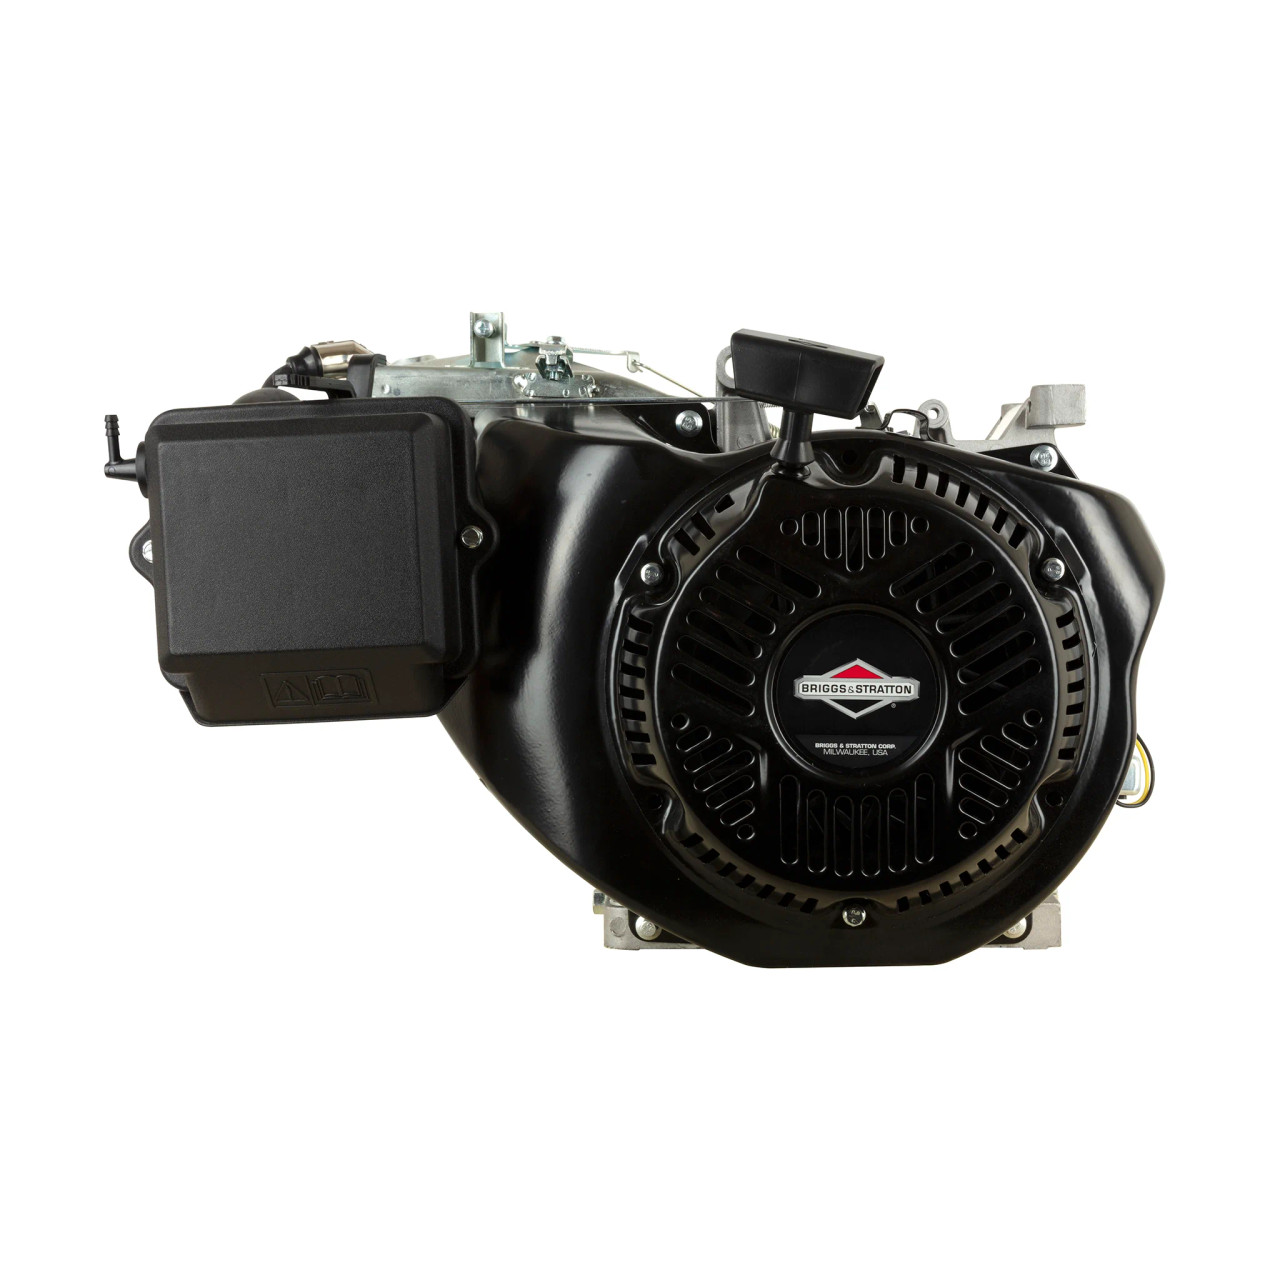 420cc Horizontal Shaft Generator Engine 25P132-0003-G1